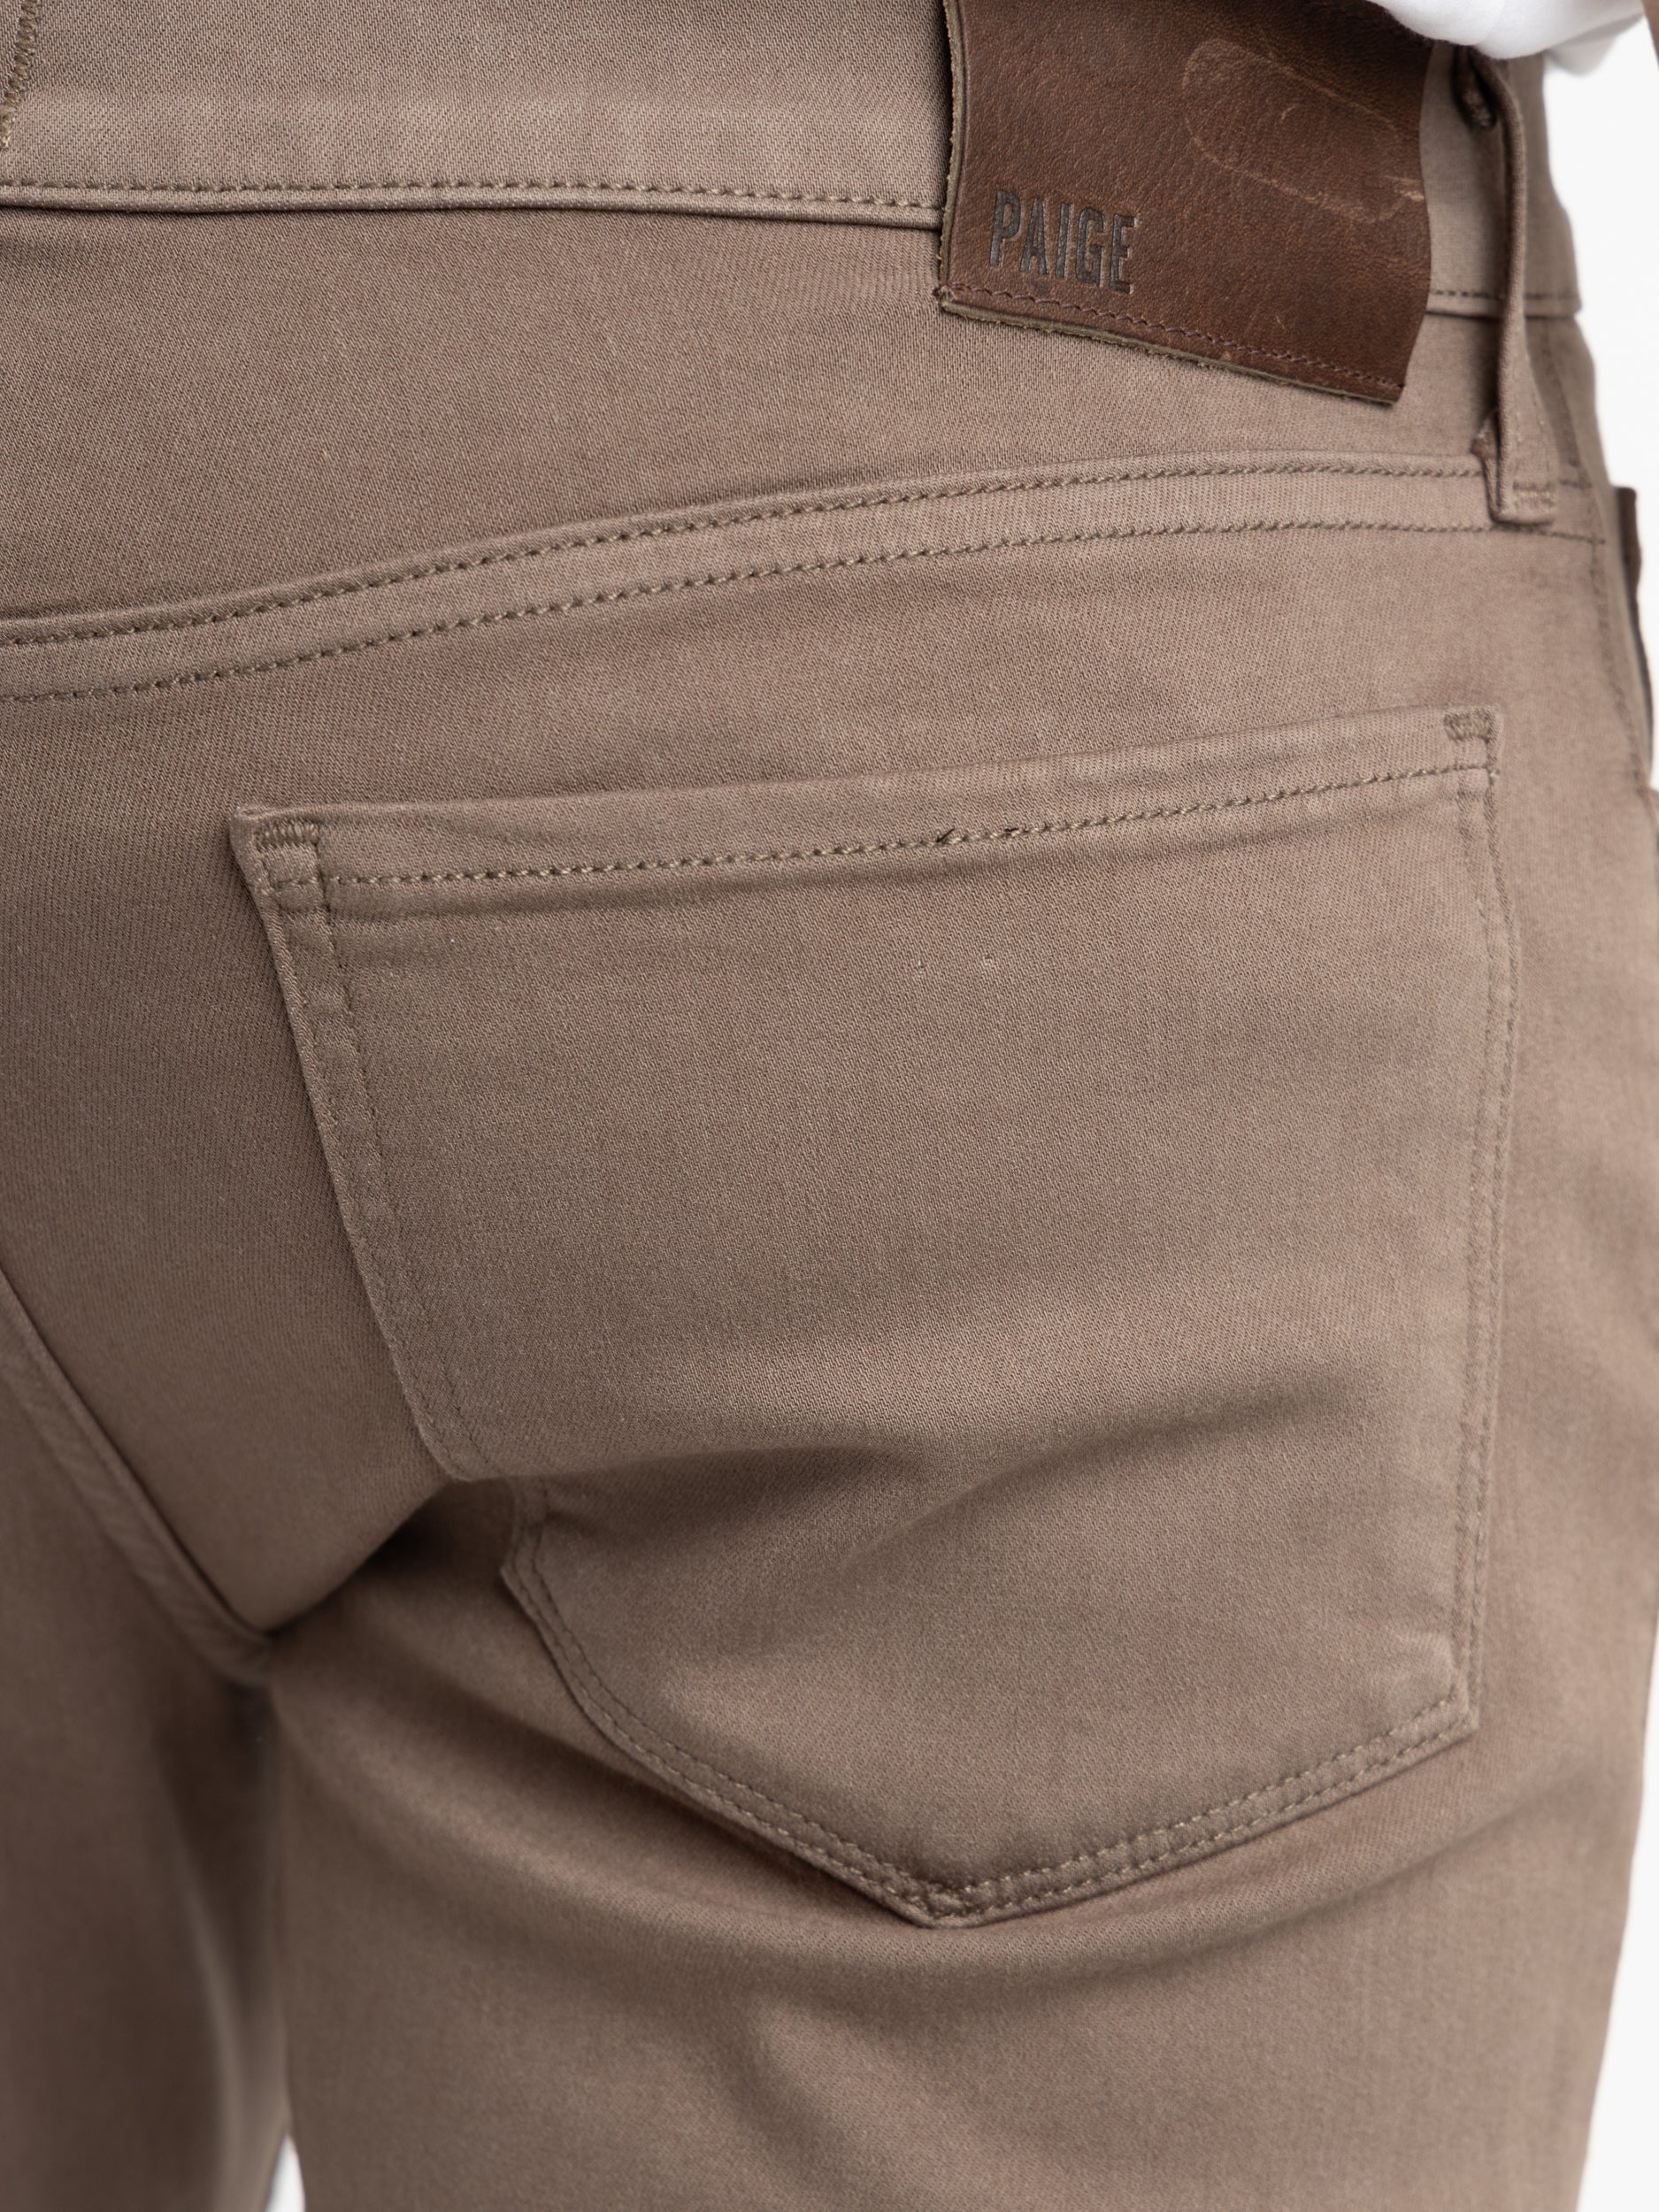 Shop Jordan Craig Sean Fit Split Knee Skinny Jeans JM3155-WOODLAND multi |  SNIPES USA